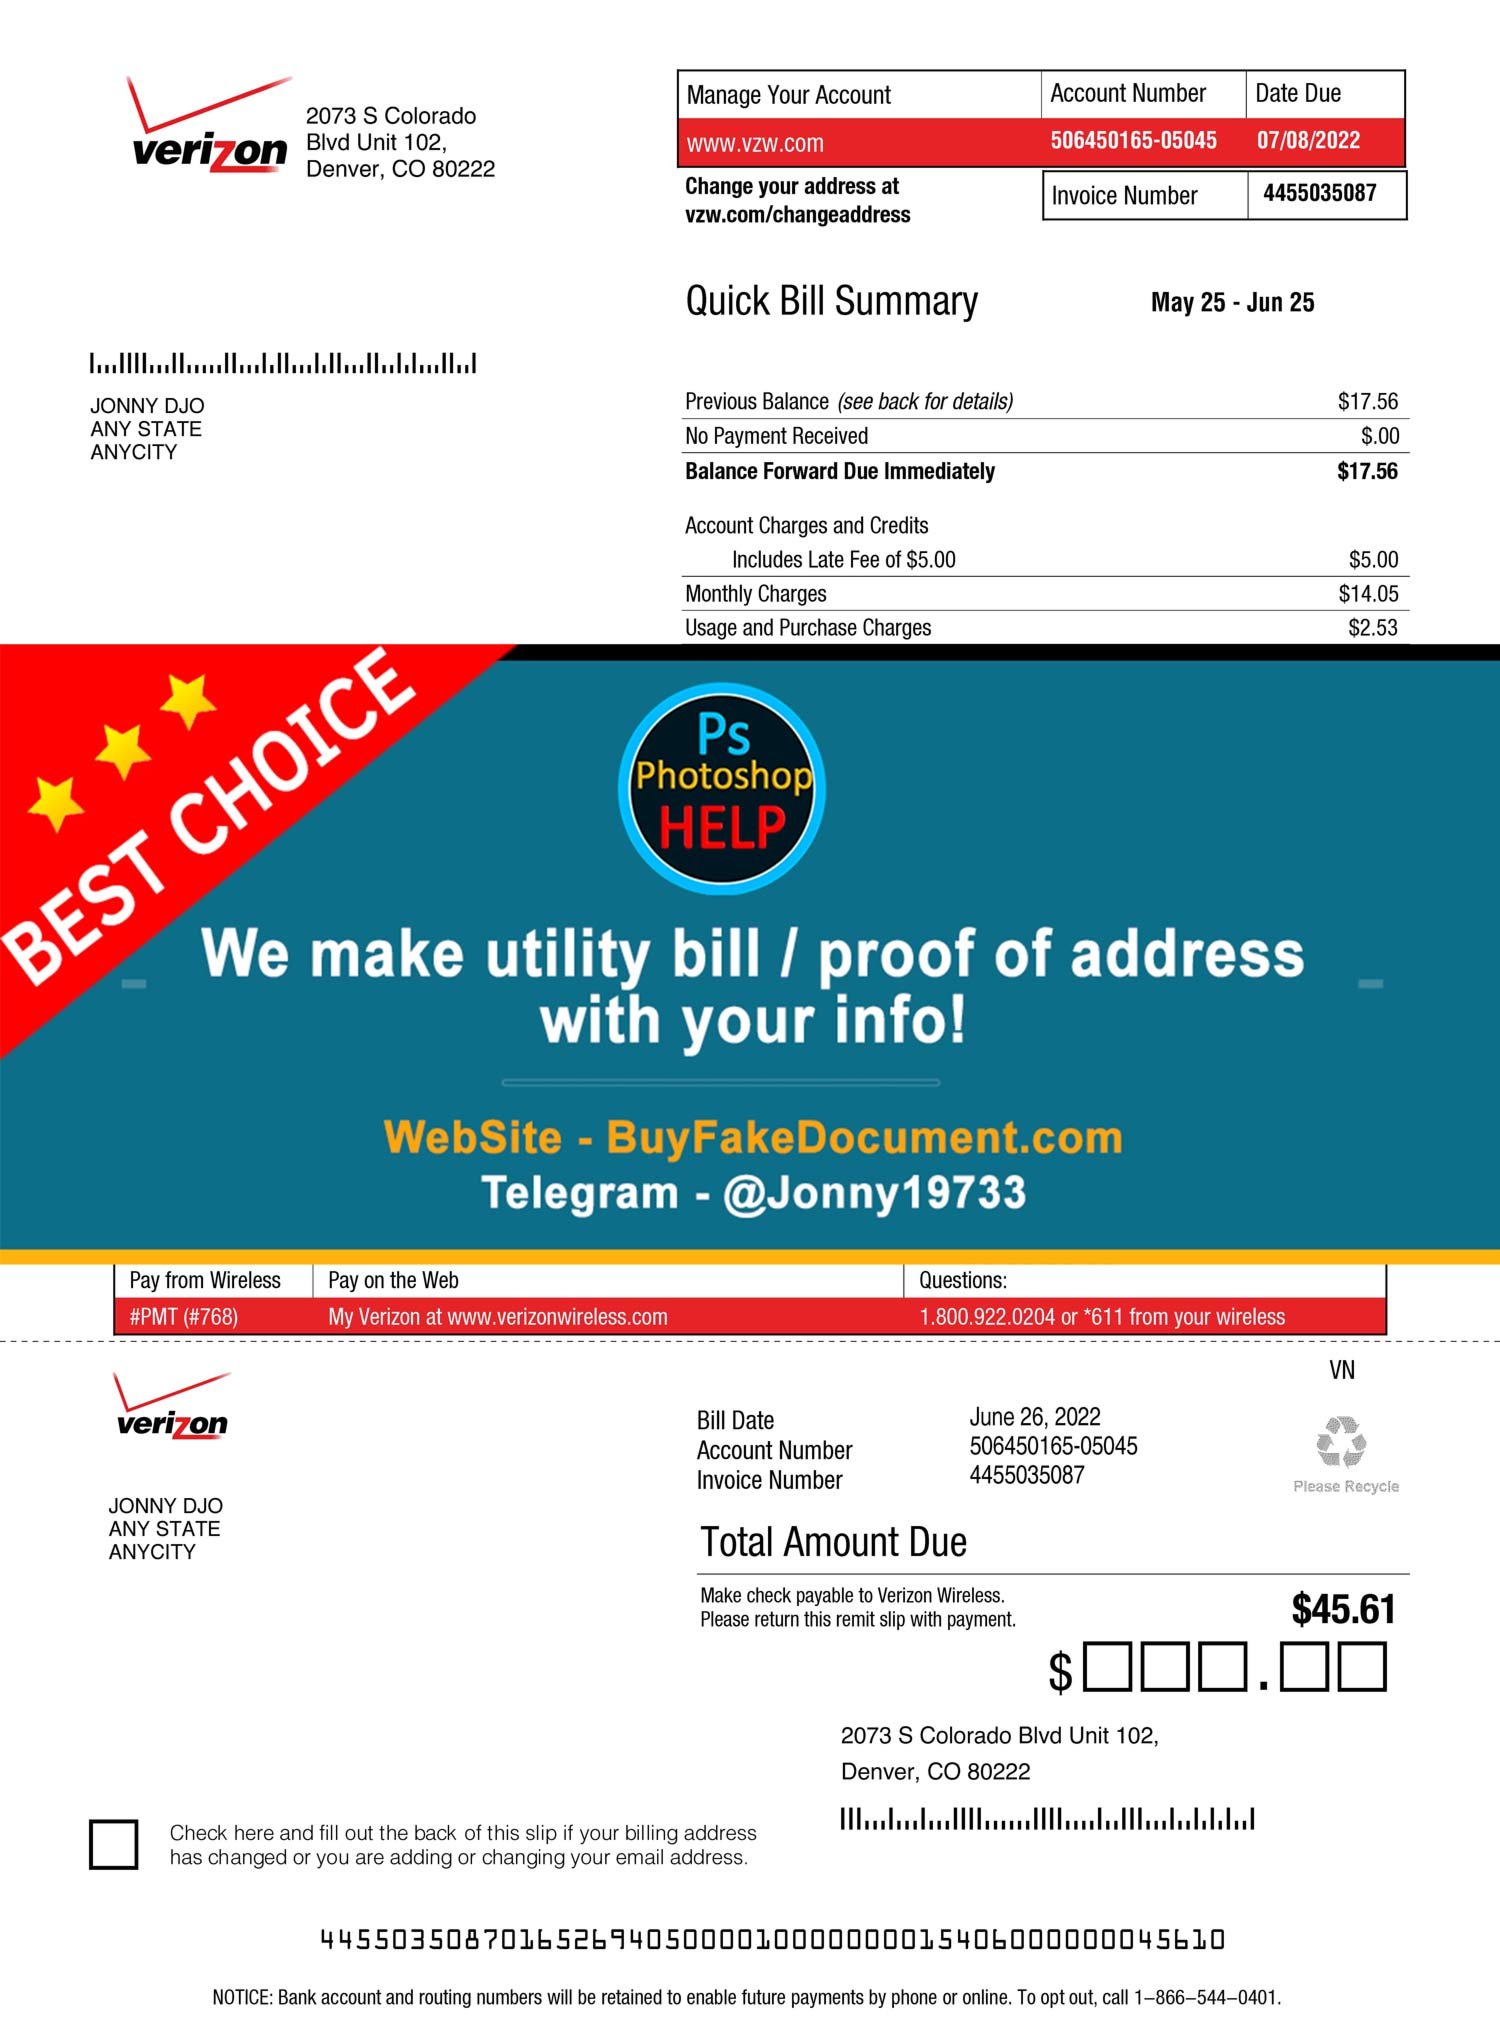 Rhode Island USA fake Proof of address Verizon utility bill Fake Utility bill